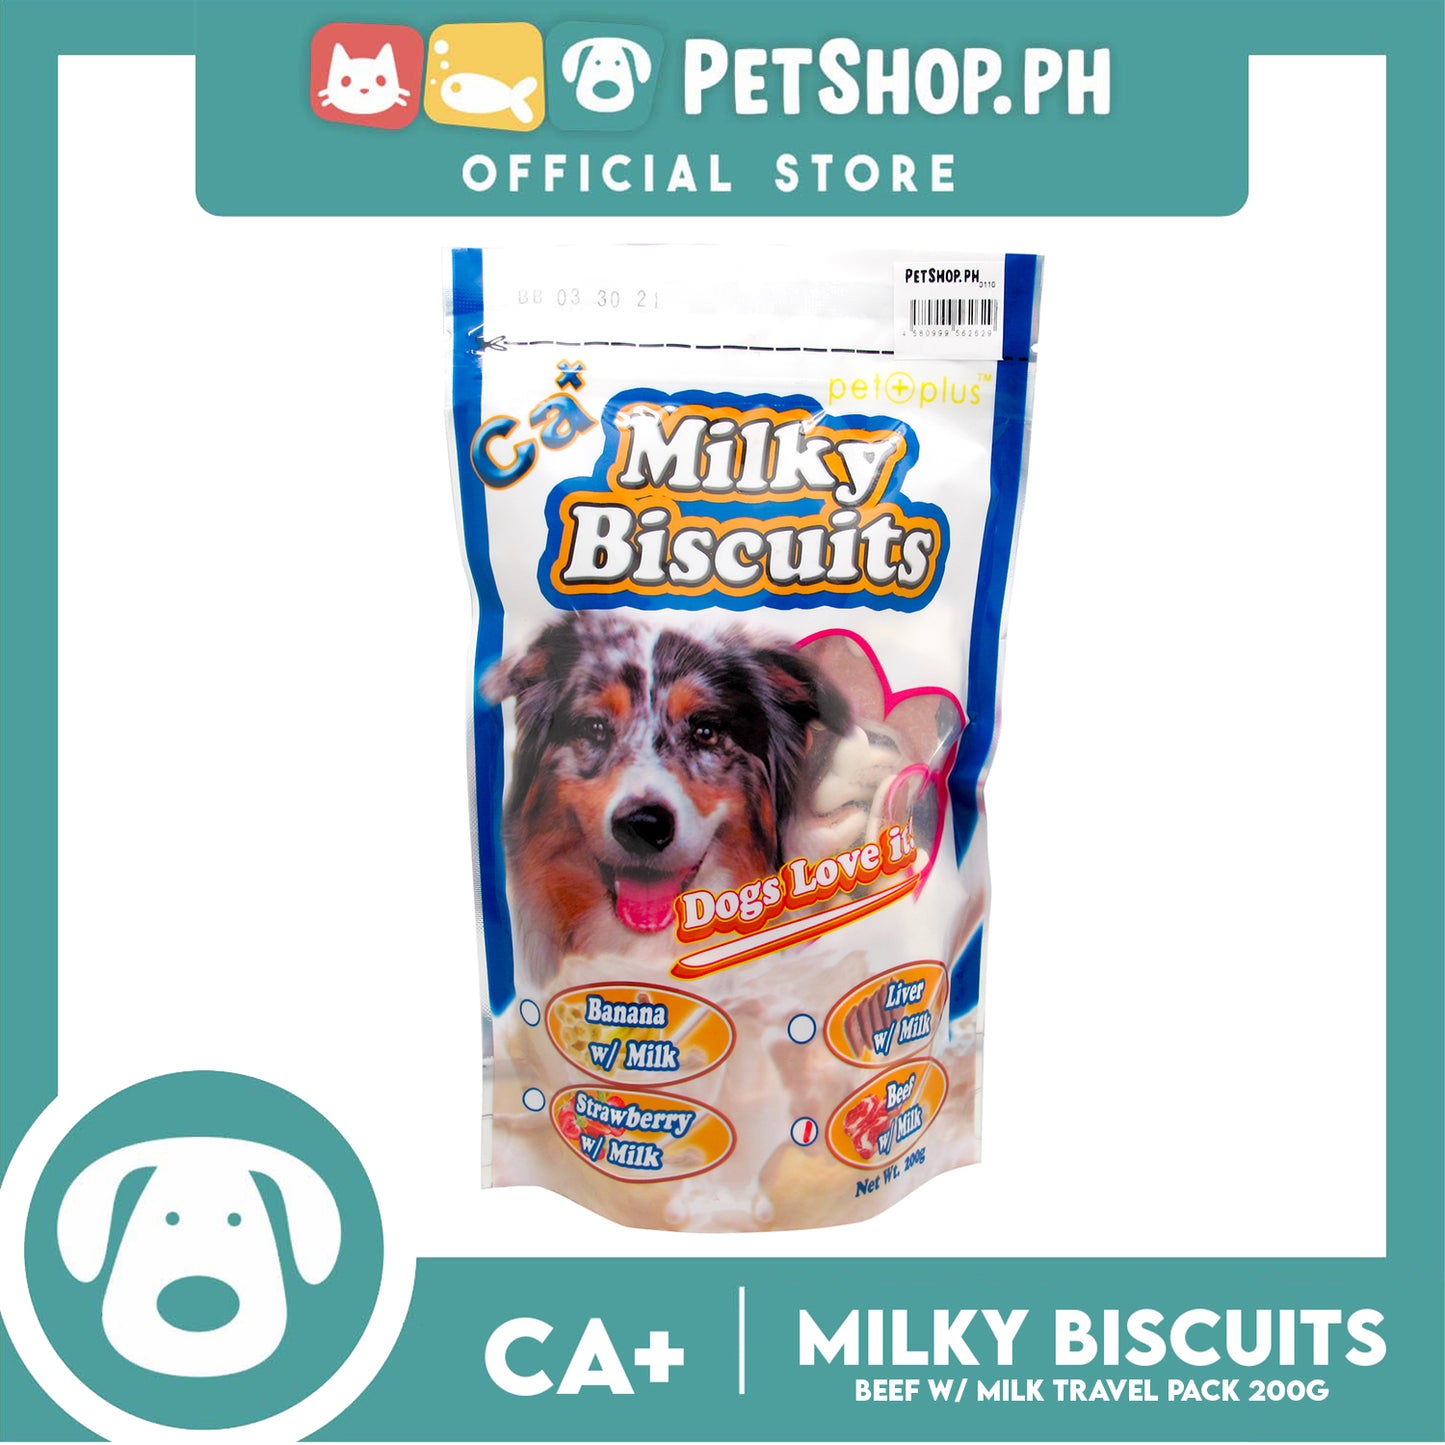 Pet Plus Calcium Milky Biscuit 200g (Beef and Milk Flavor) For Dogs Strong Bones and Teeth